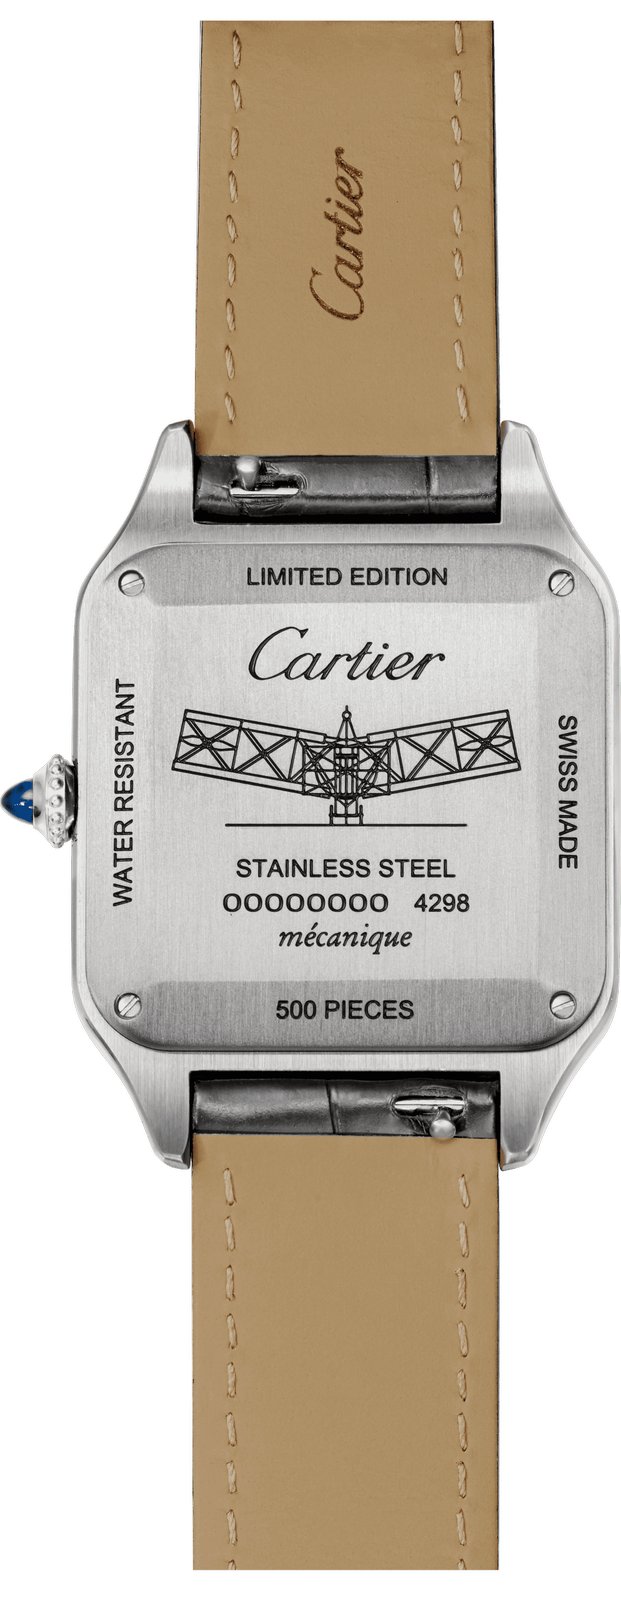 cartier santos limited edition watch